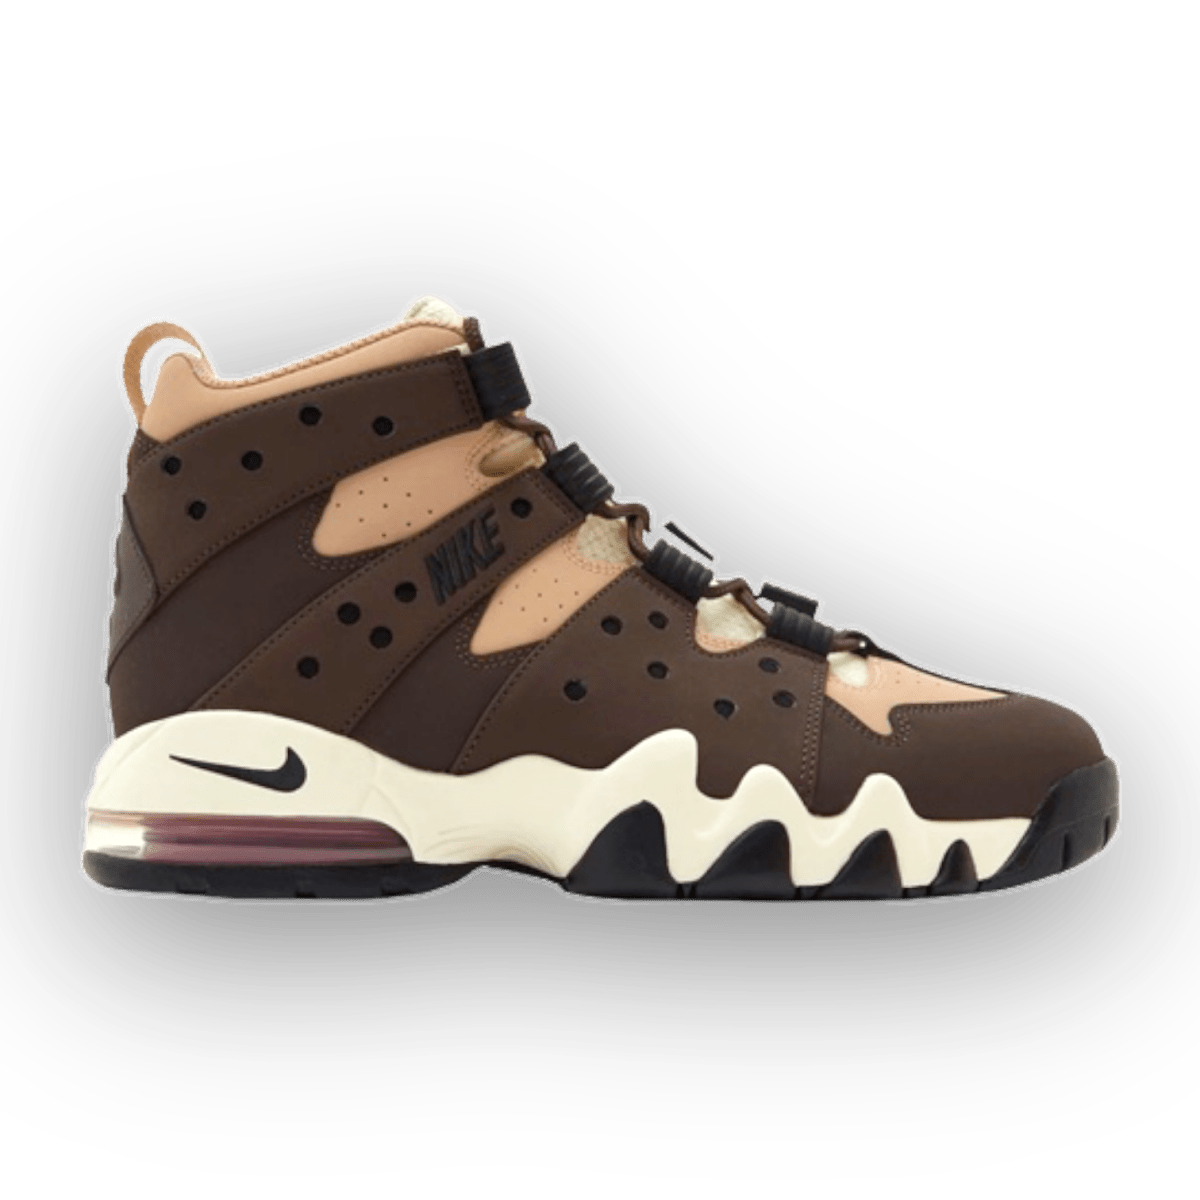 Air Max 2 CB 94 'Baroque Brown' - Mid Sneaker - Jawns on Fire Sneakers & Streetwear